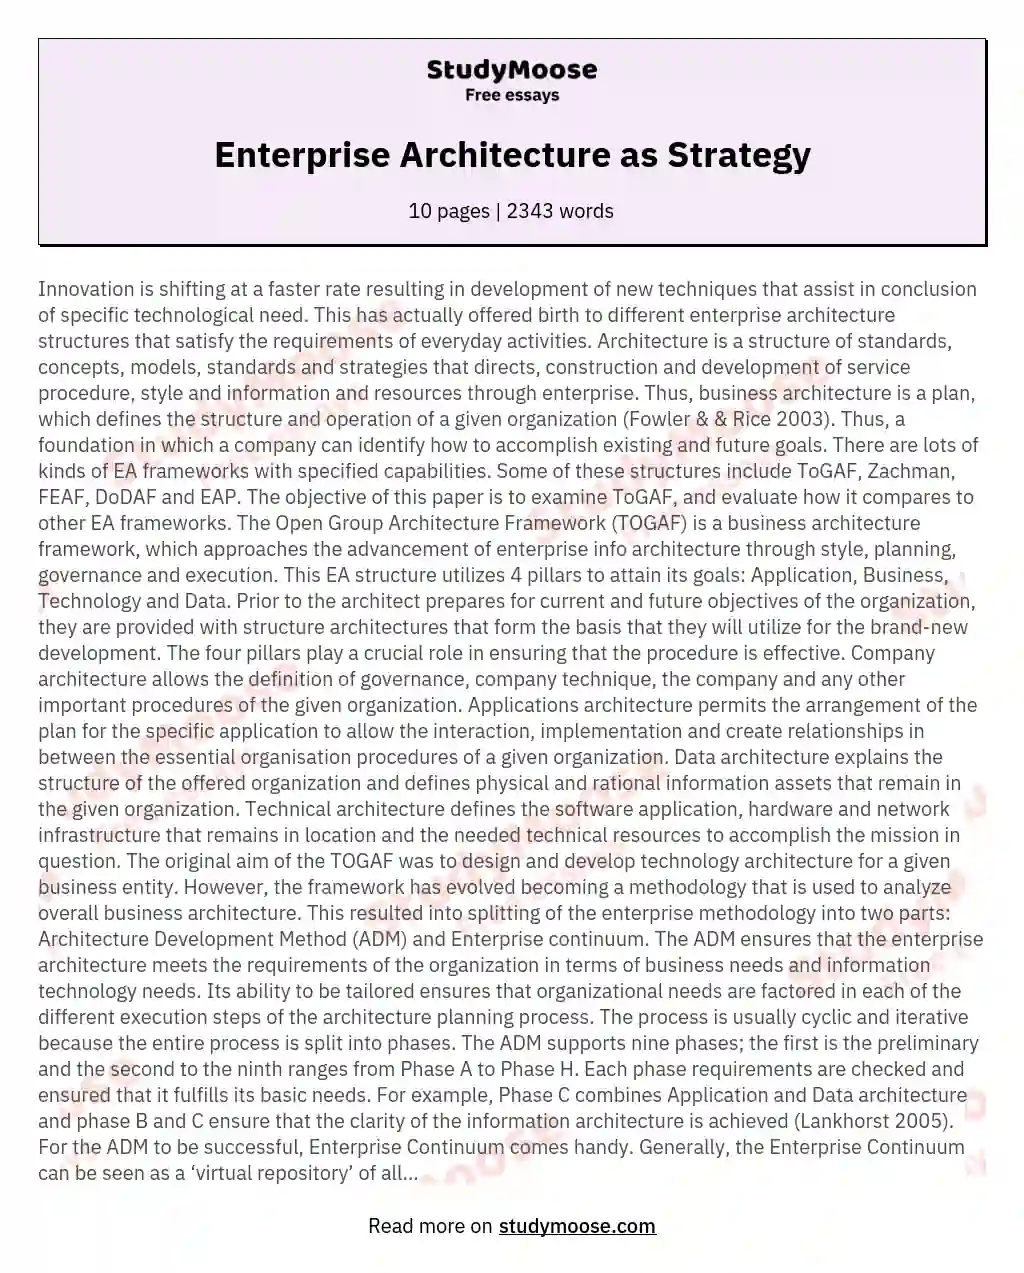 Enterprise Architecture as Strategy essay